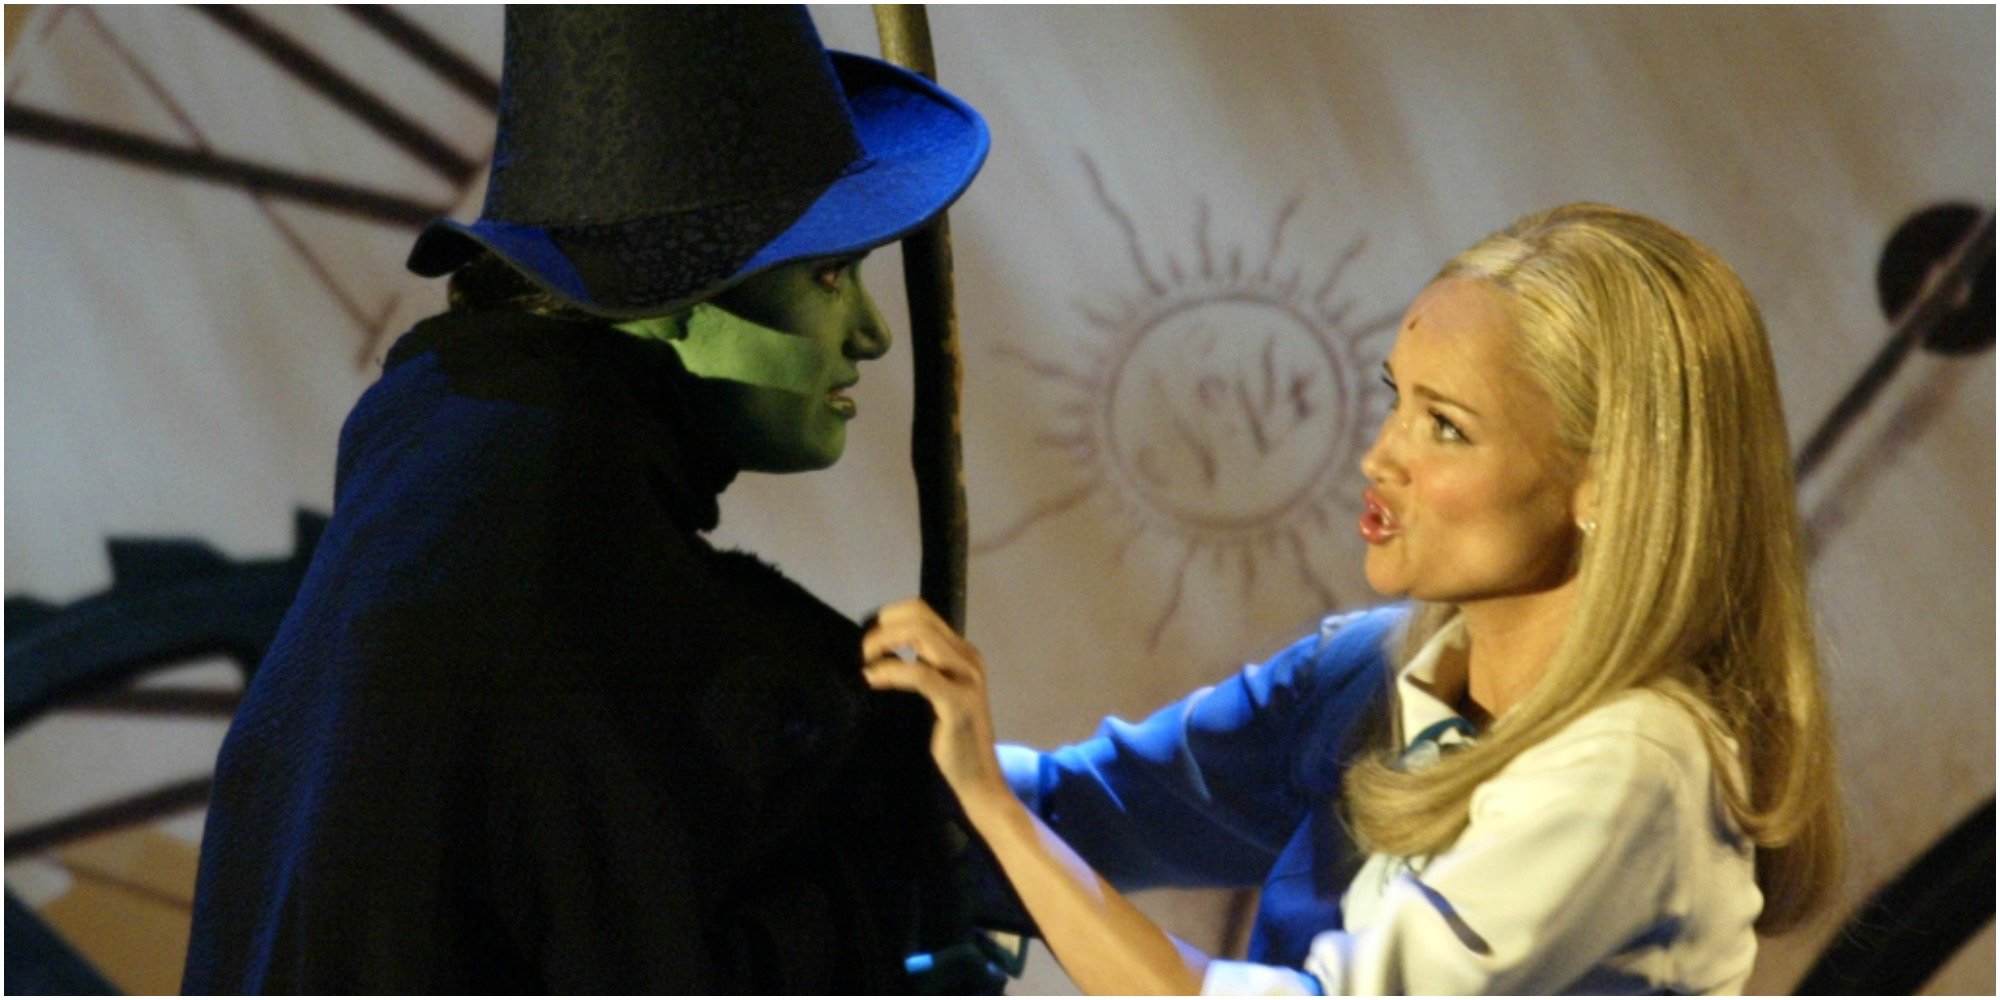 Idina Menzel and Kristin Chenoweth starred in "Wicked."